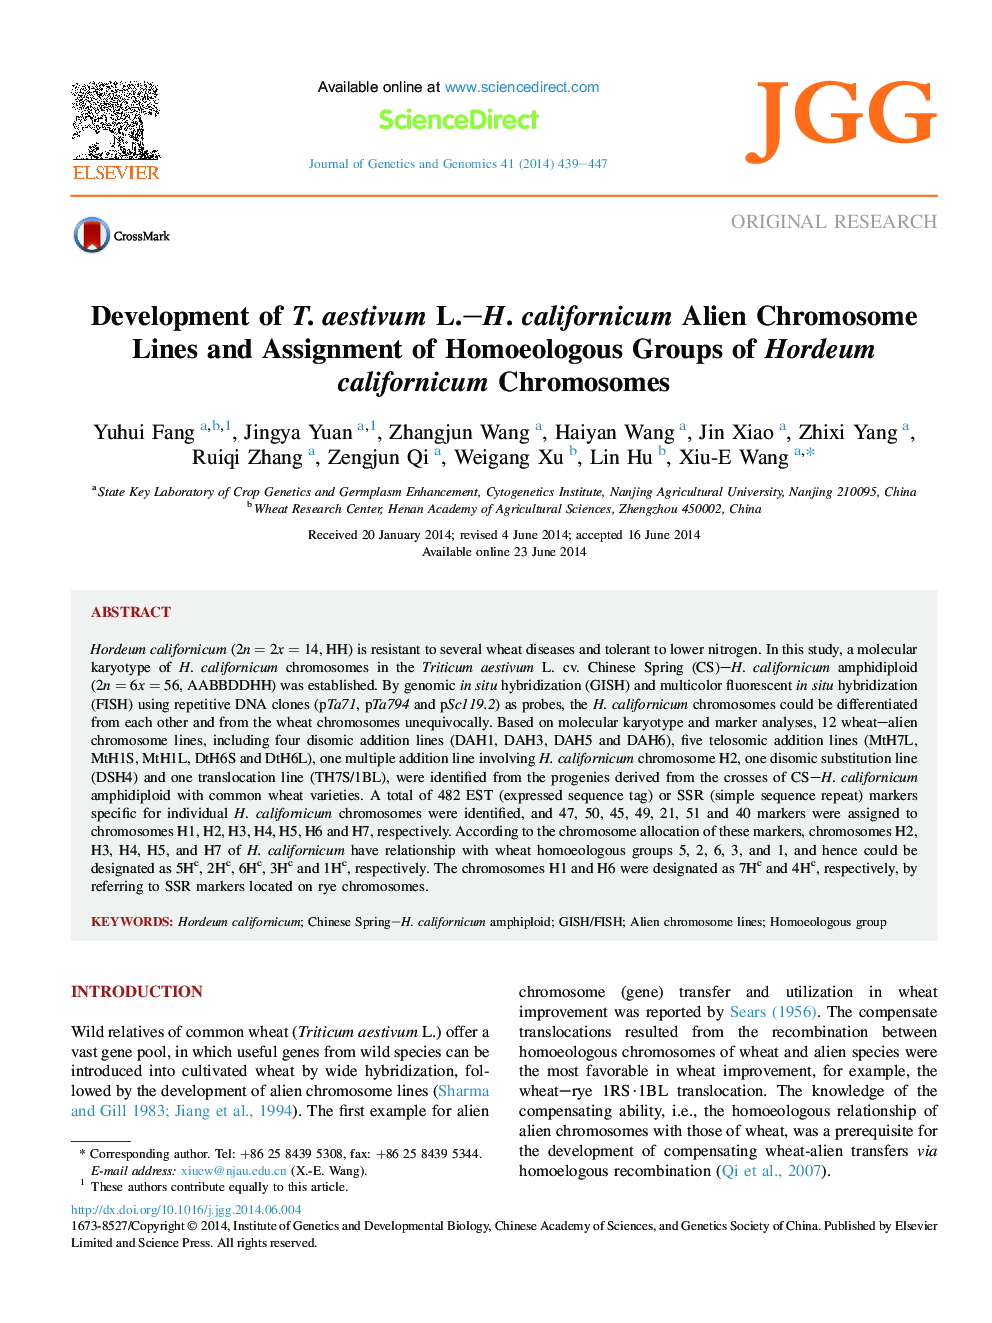 Development of T. aestivum L.–H. californicum Alien Chromosome Lines and Assignment of Homoeologous Groups of Hordeum californicum Chromosomes